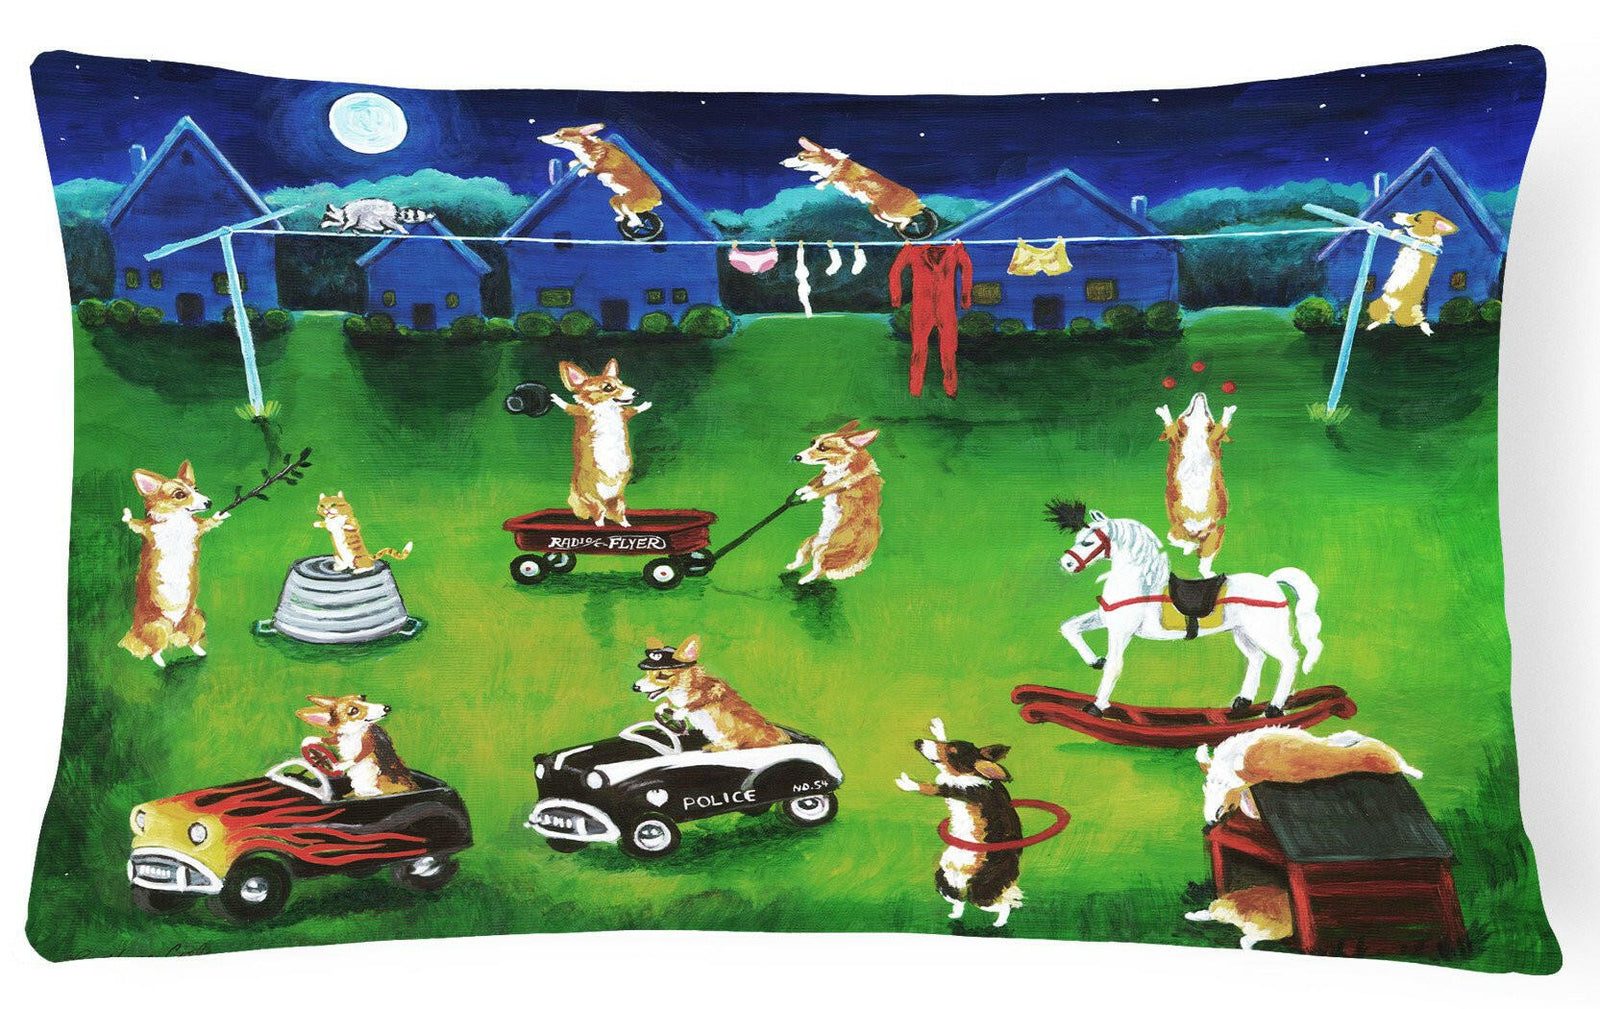 Corgi Backyard Circus Fabric Decorative Pillow 7403PW1216 by Caroline's Treasures